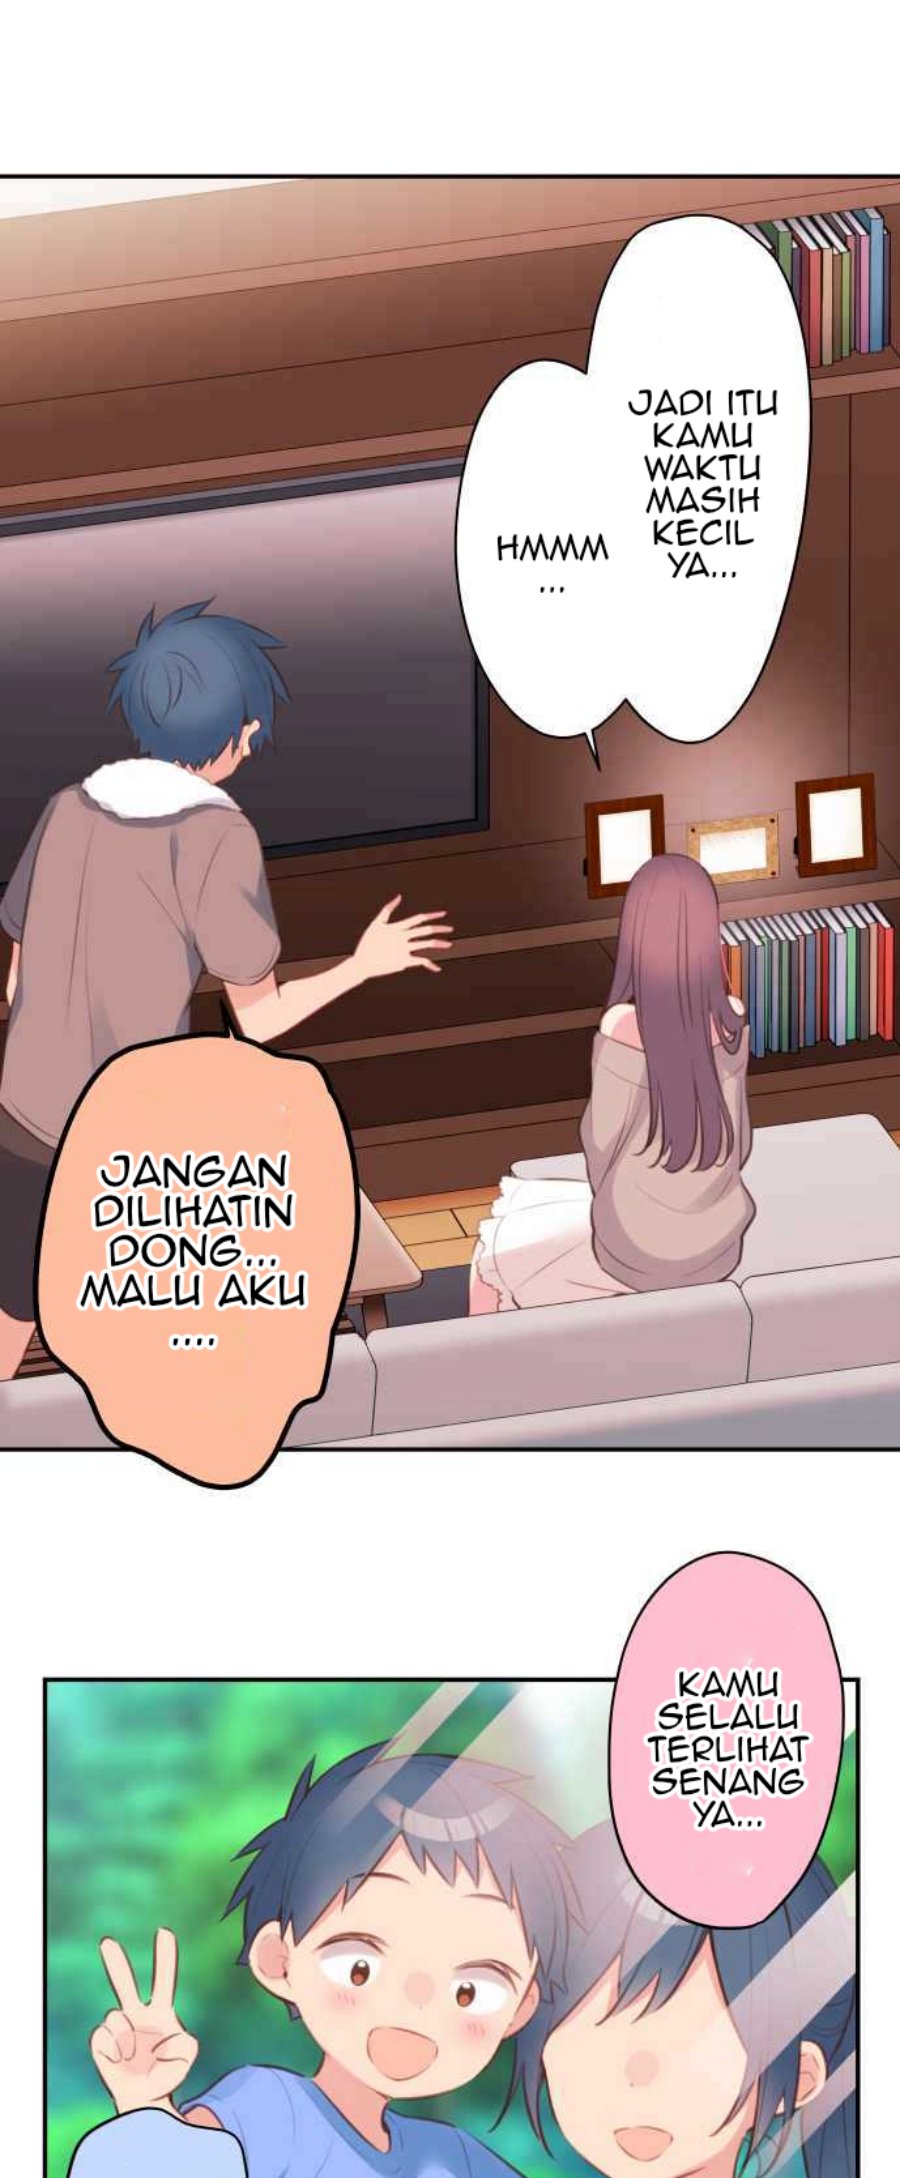 Waka-chan Is Flirty Again Chapter 69